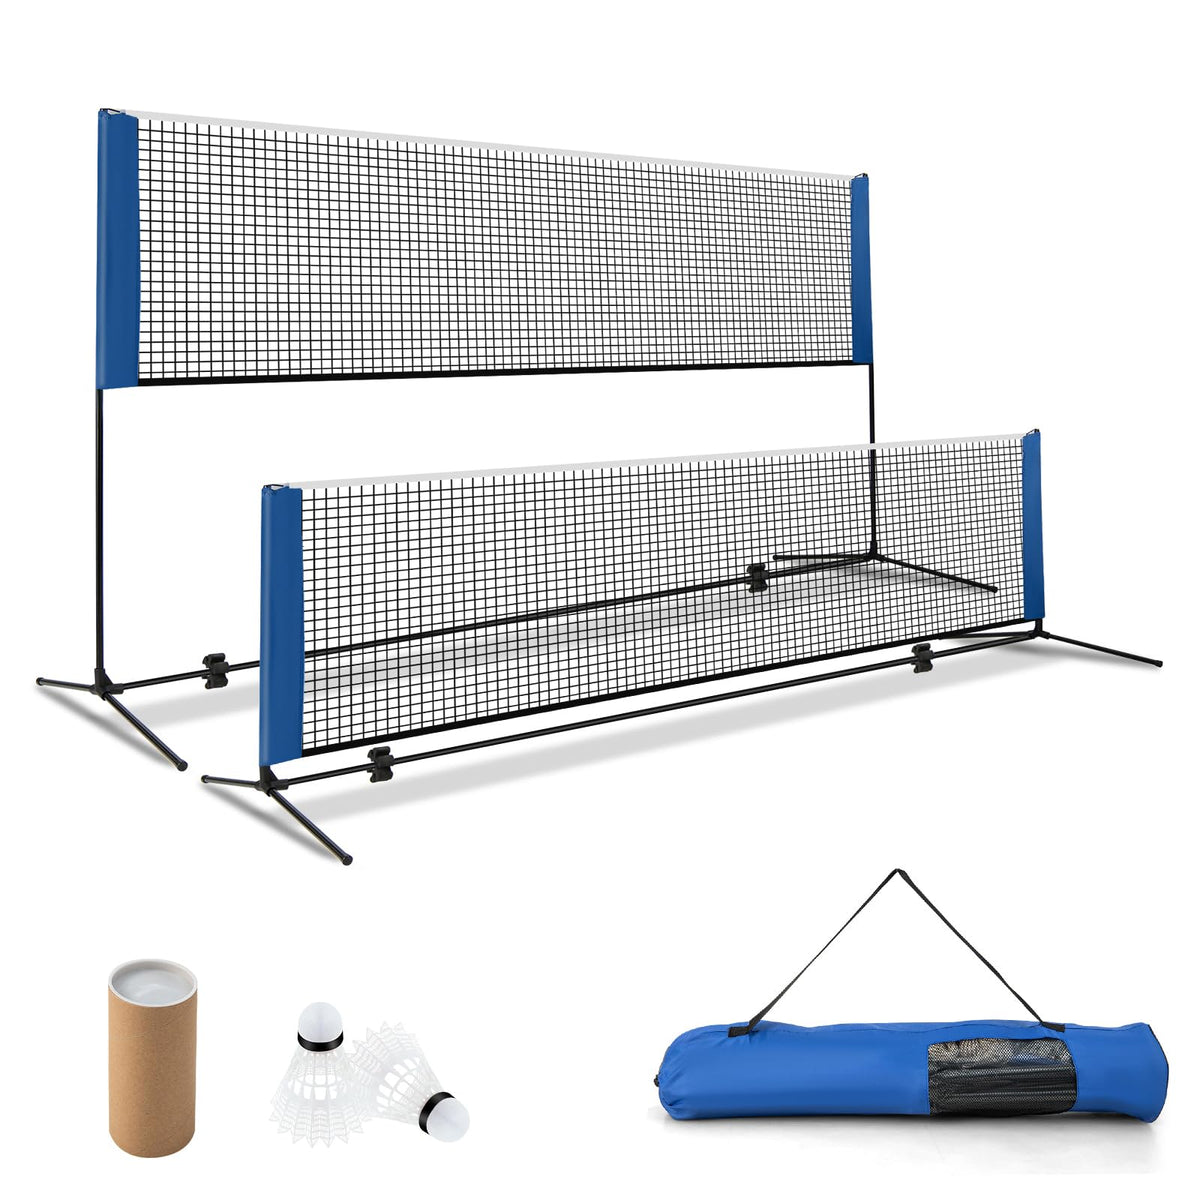 Goplus Portable Badminton Net Set, 10FT Volleyball Pickleball Net